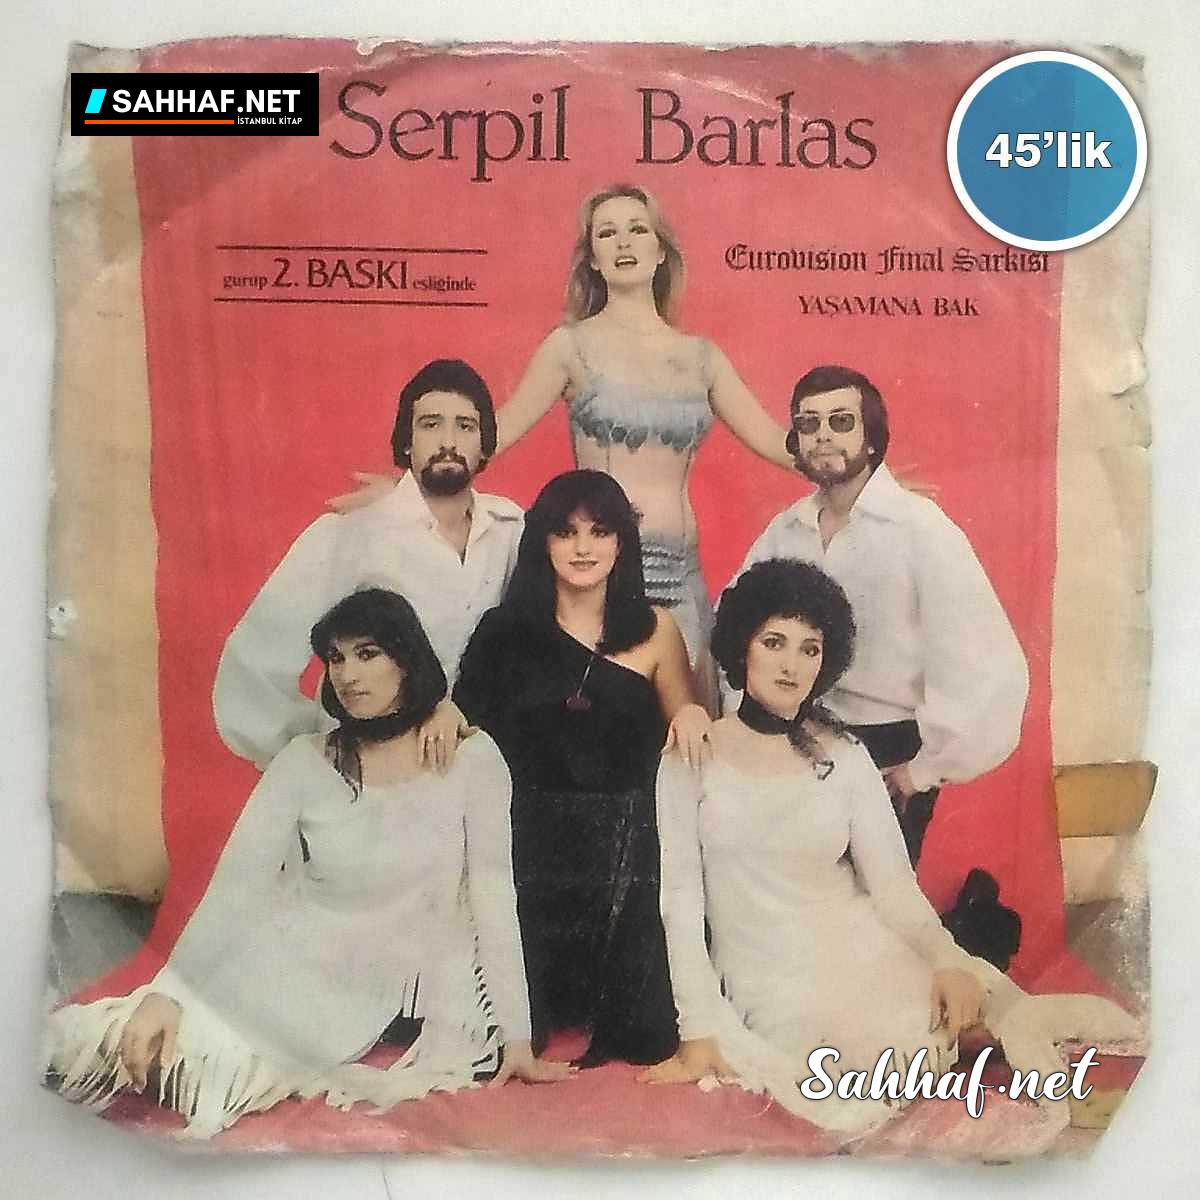 SERPİL BARLAS – Yaşamana Bak – Yaşamana Bak – 45lik Plak Sahhaf.Net Film Müzik